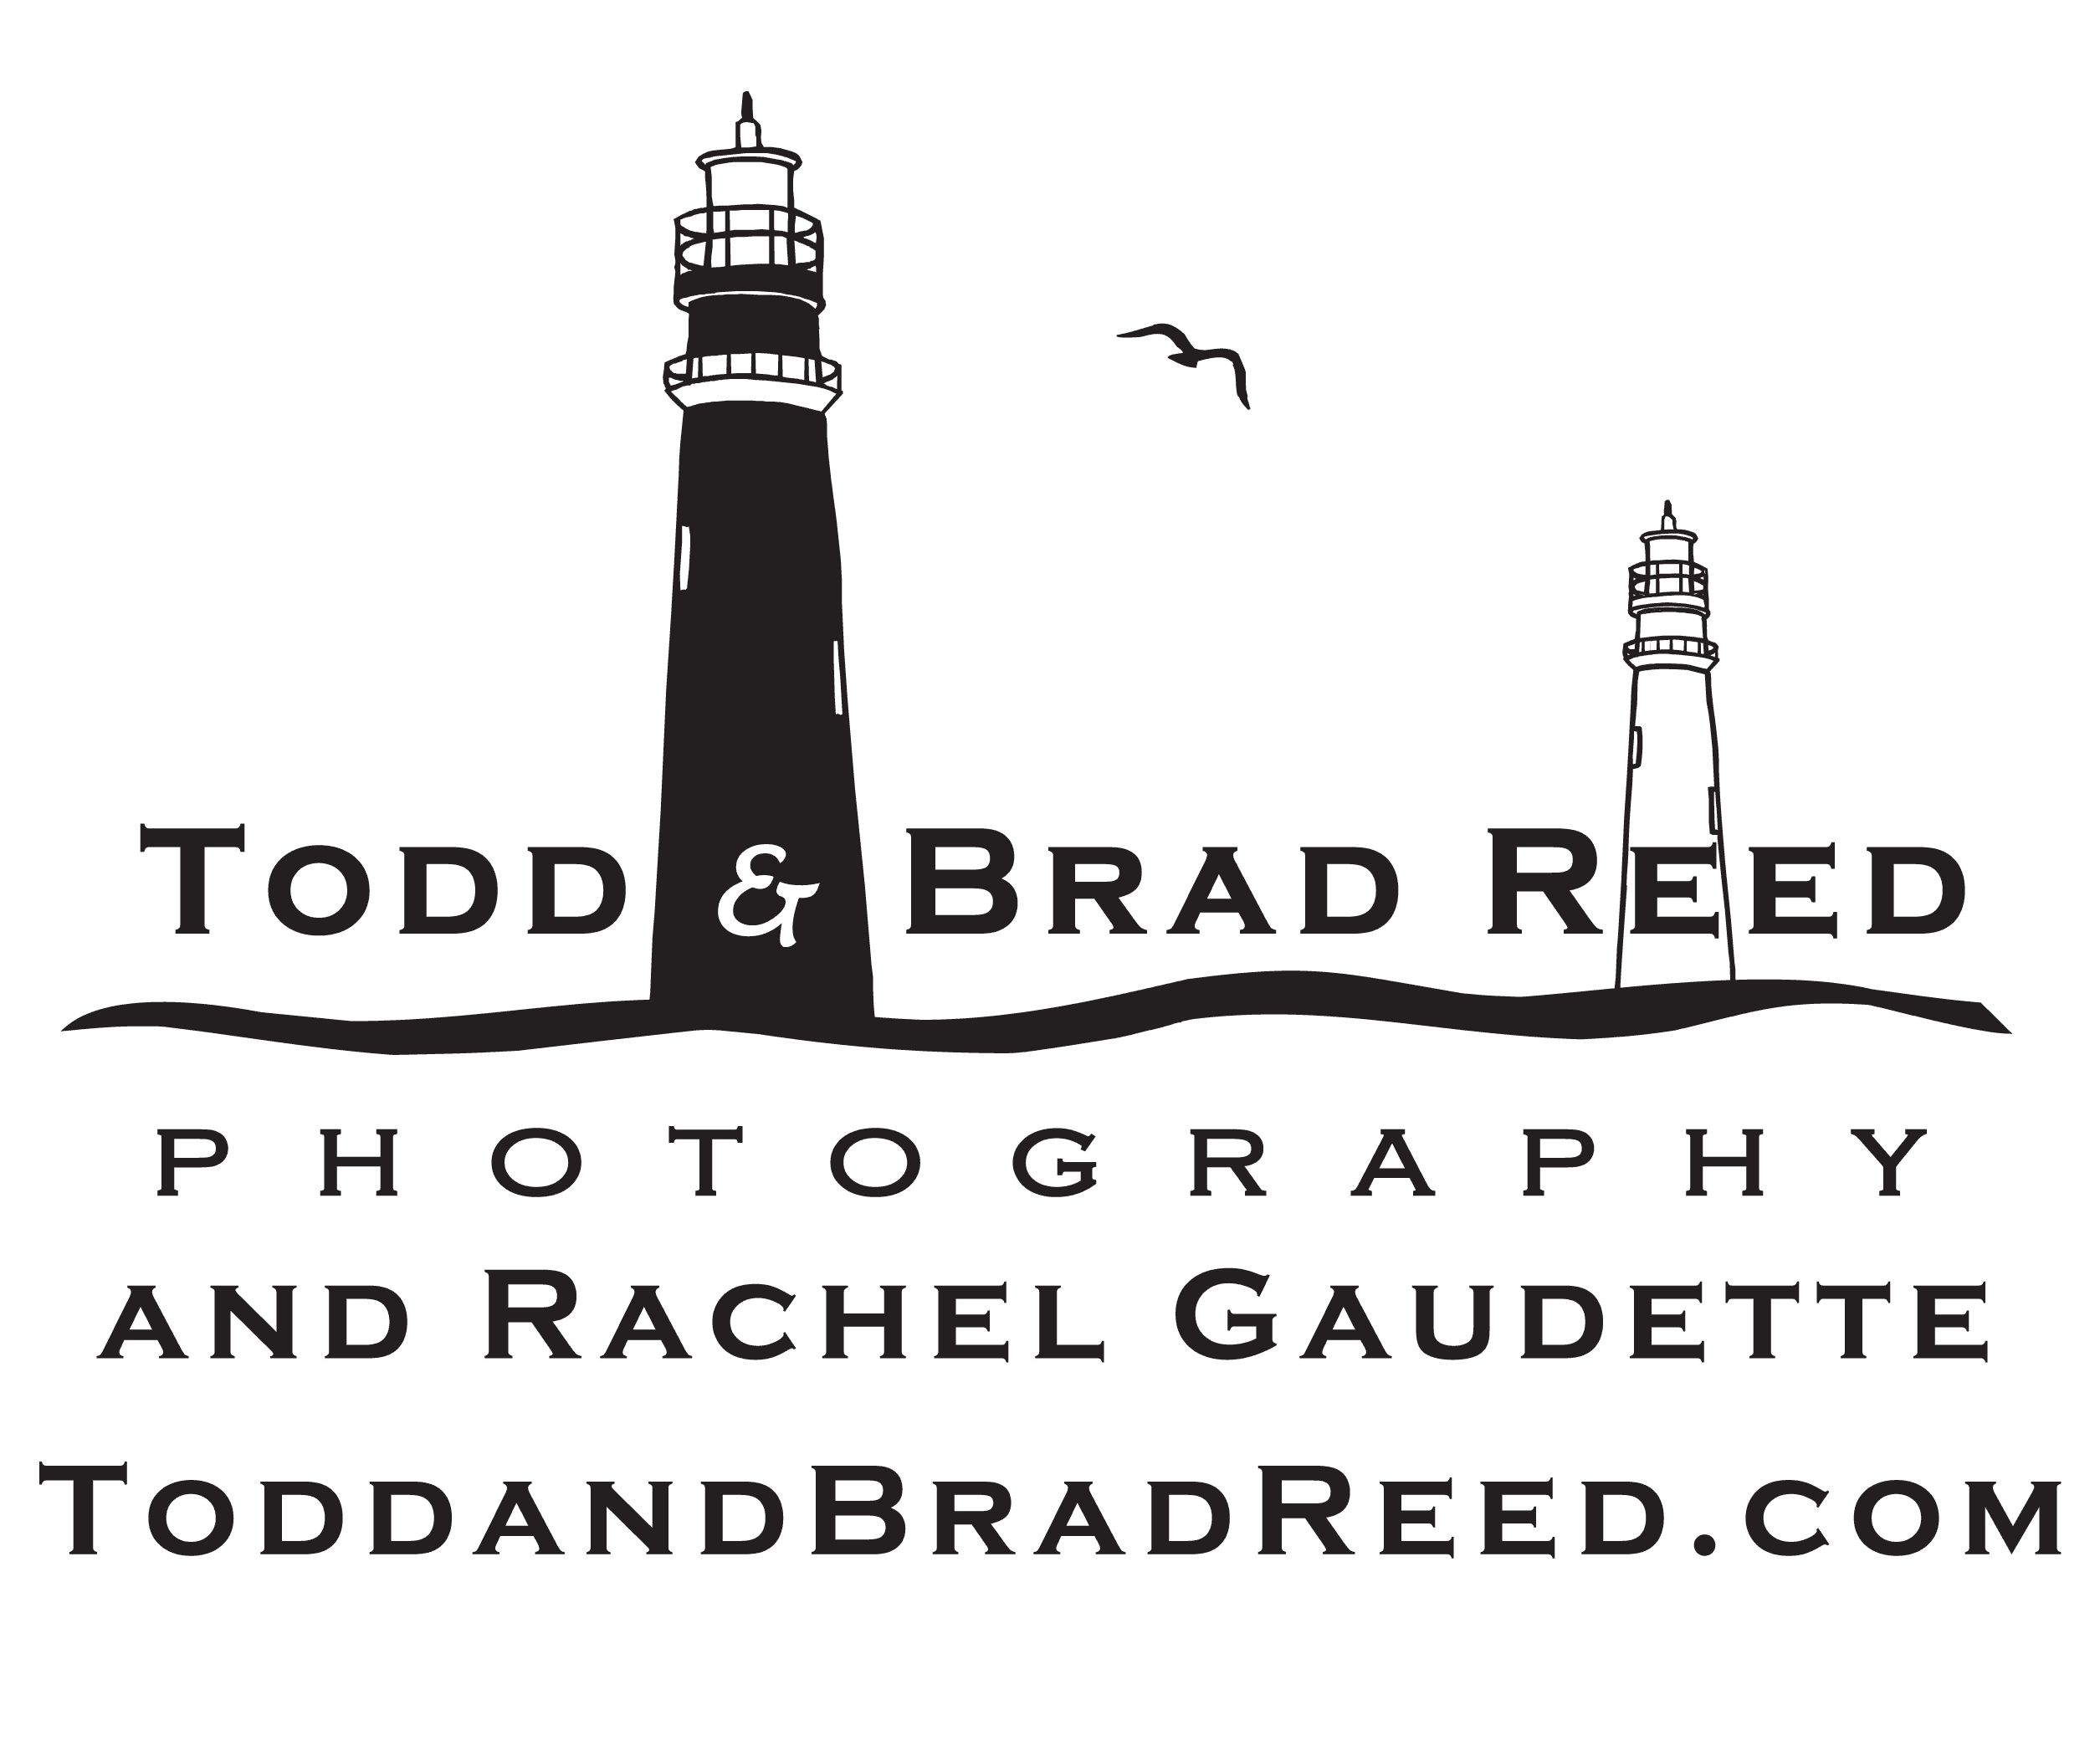 Todd & Brad Reed Photography